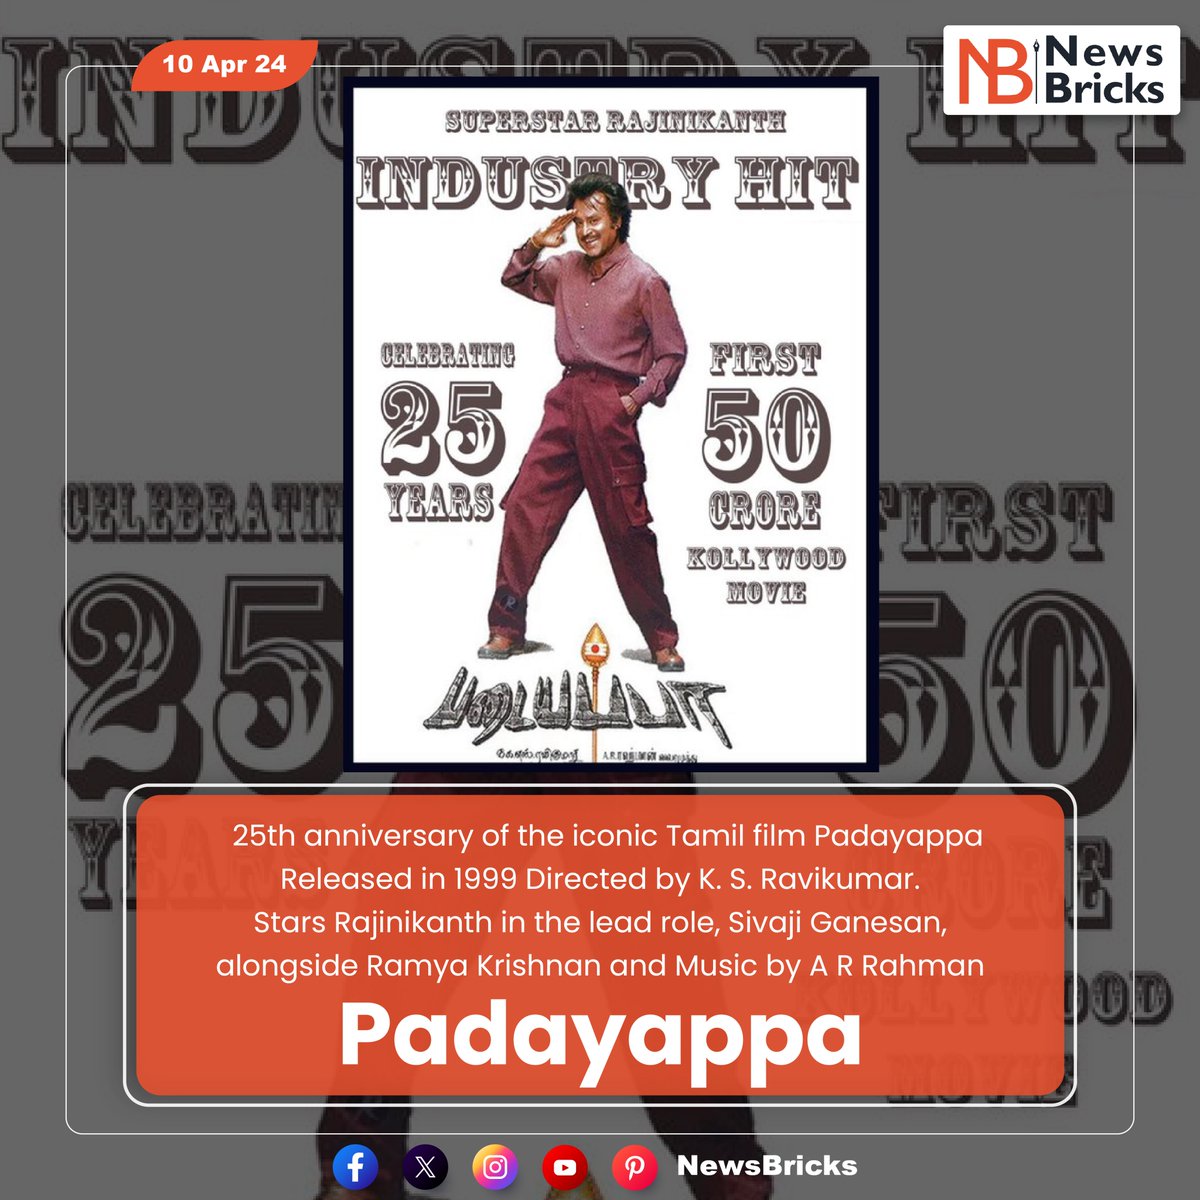 25 Years of Padayappa✨

#25YearsOfPadayappa  #SuperstarRajinikanth #Padayappa #Kollywood #Tamil #SivajiGanesan #RamyaKrishnan #ARRahman